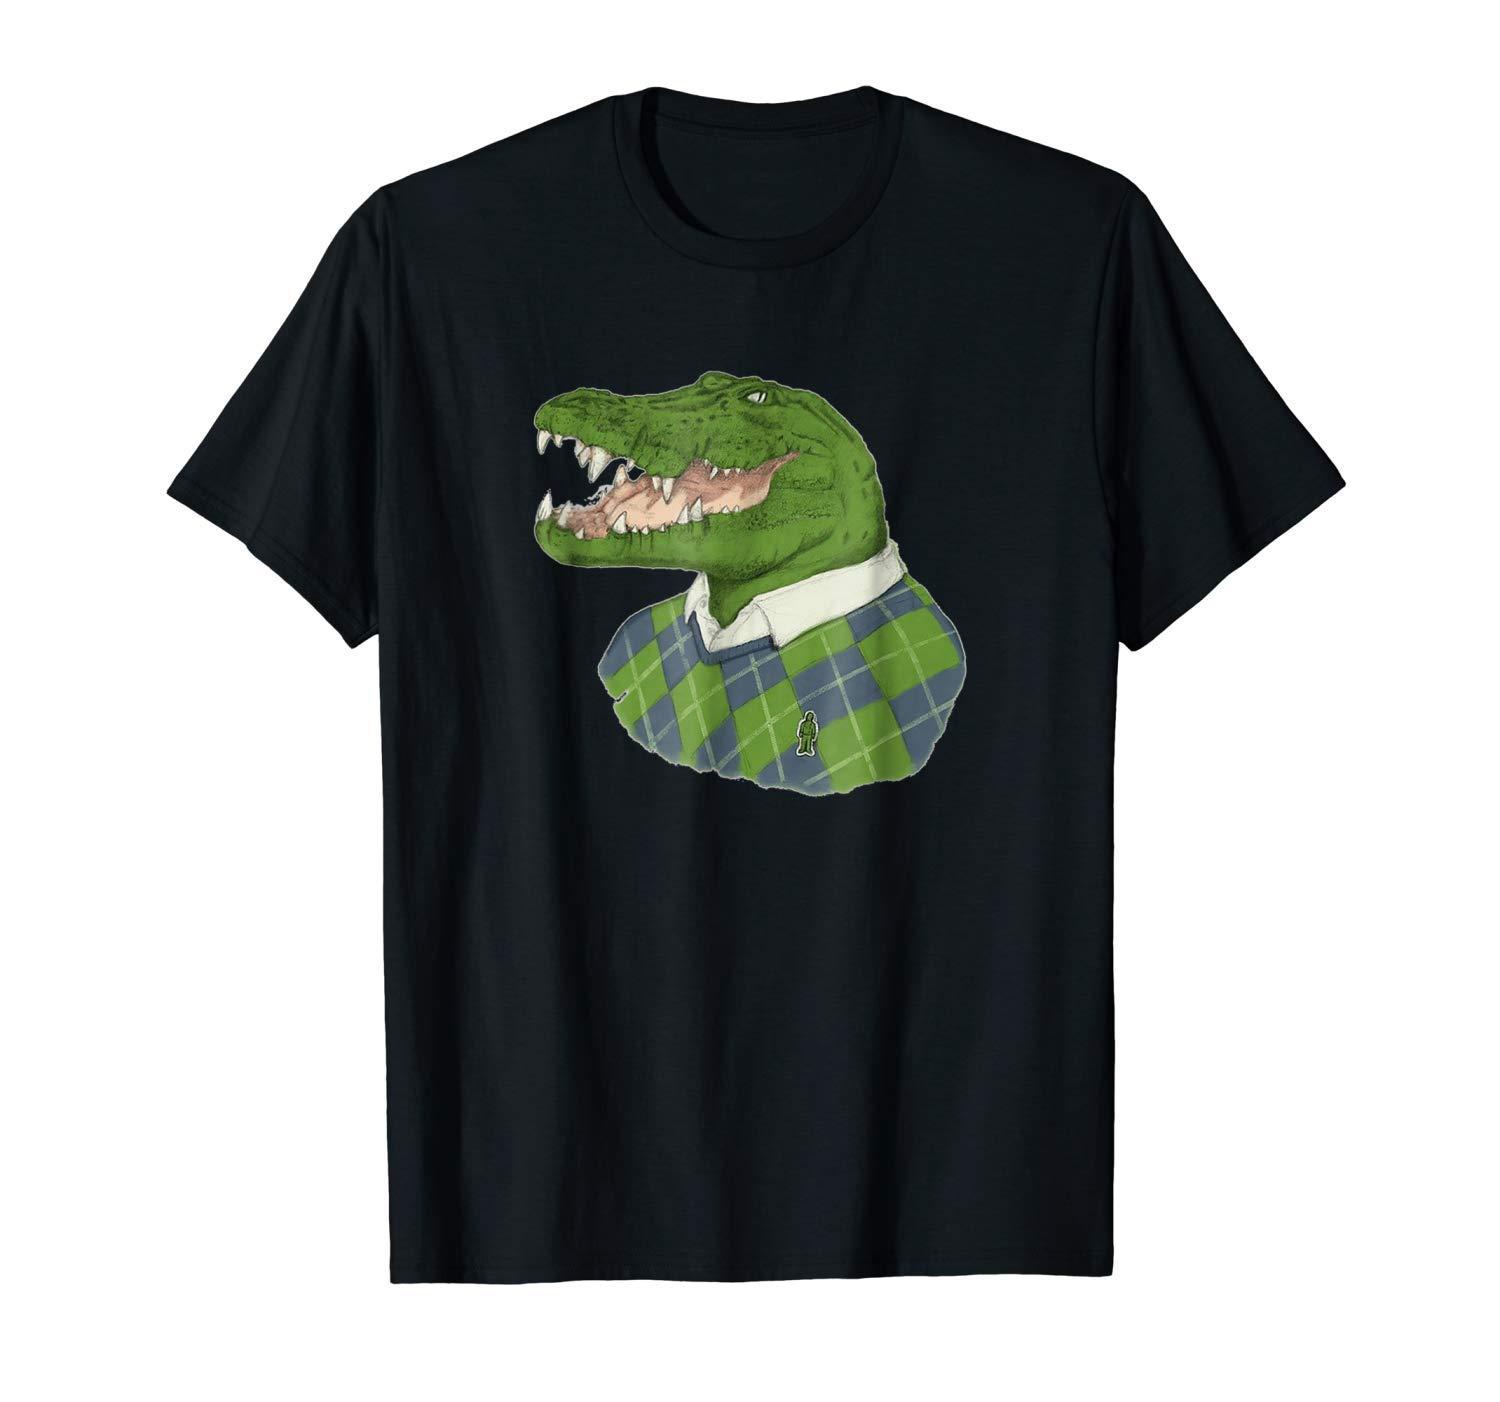 Clothing Brand with Alligator Logo - Alligator Crocodile T Shirt Cute Zoo Animal Jungle T Shirt Brand